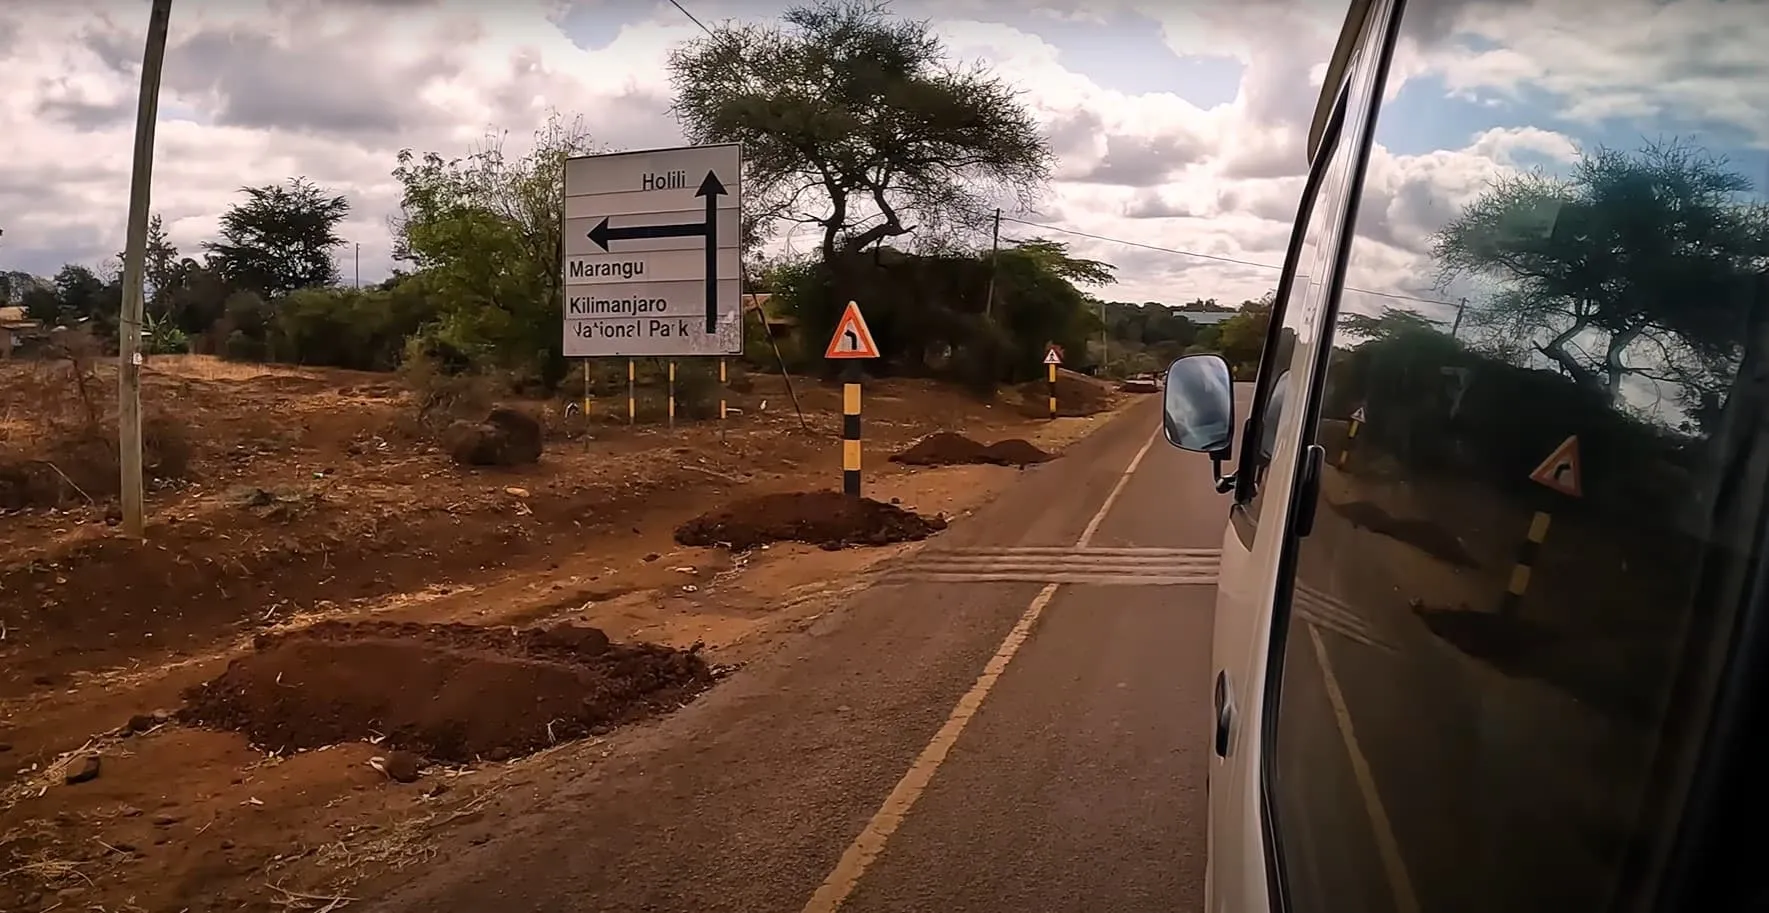 What Makes the Marangu Route So Special?